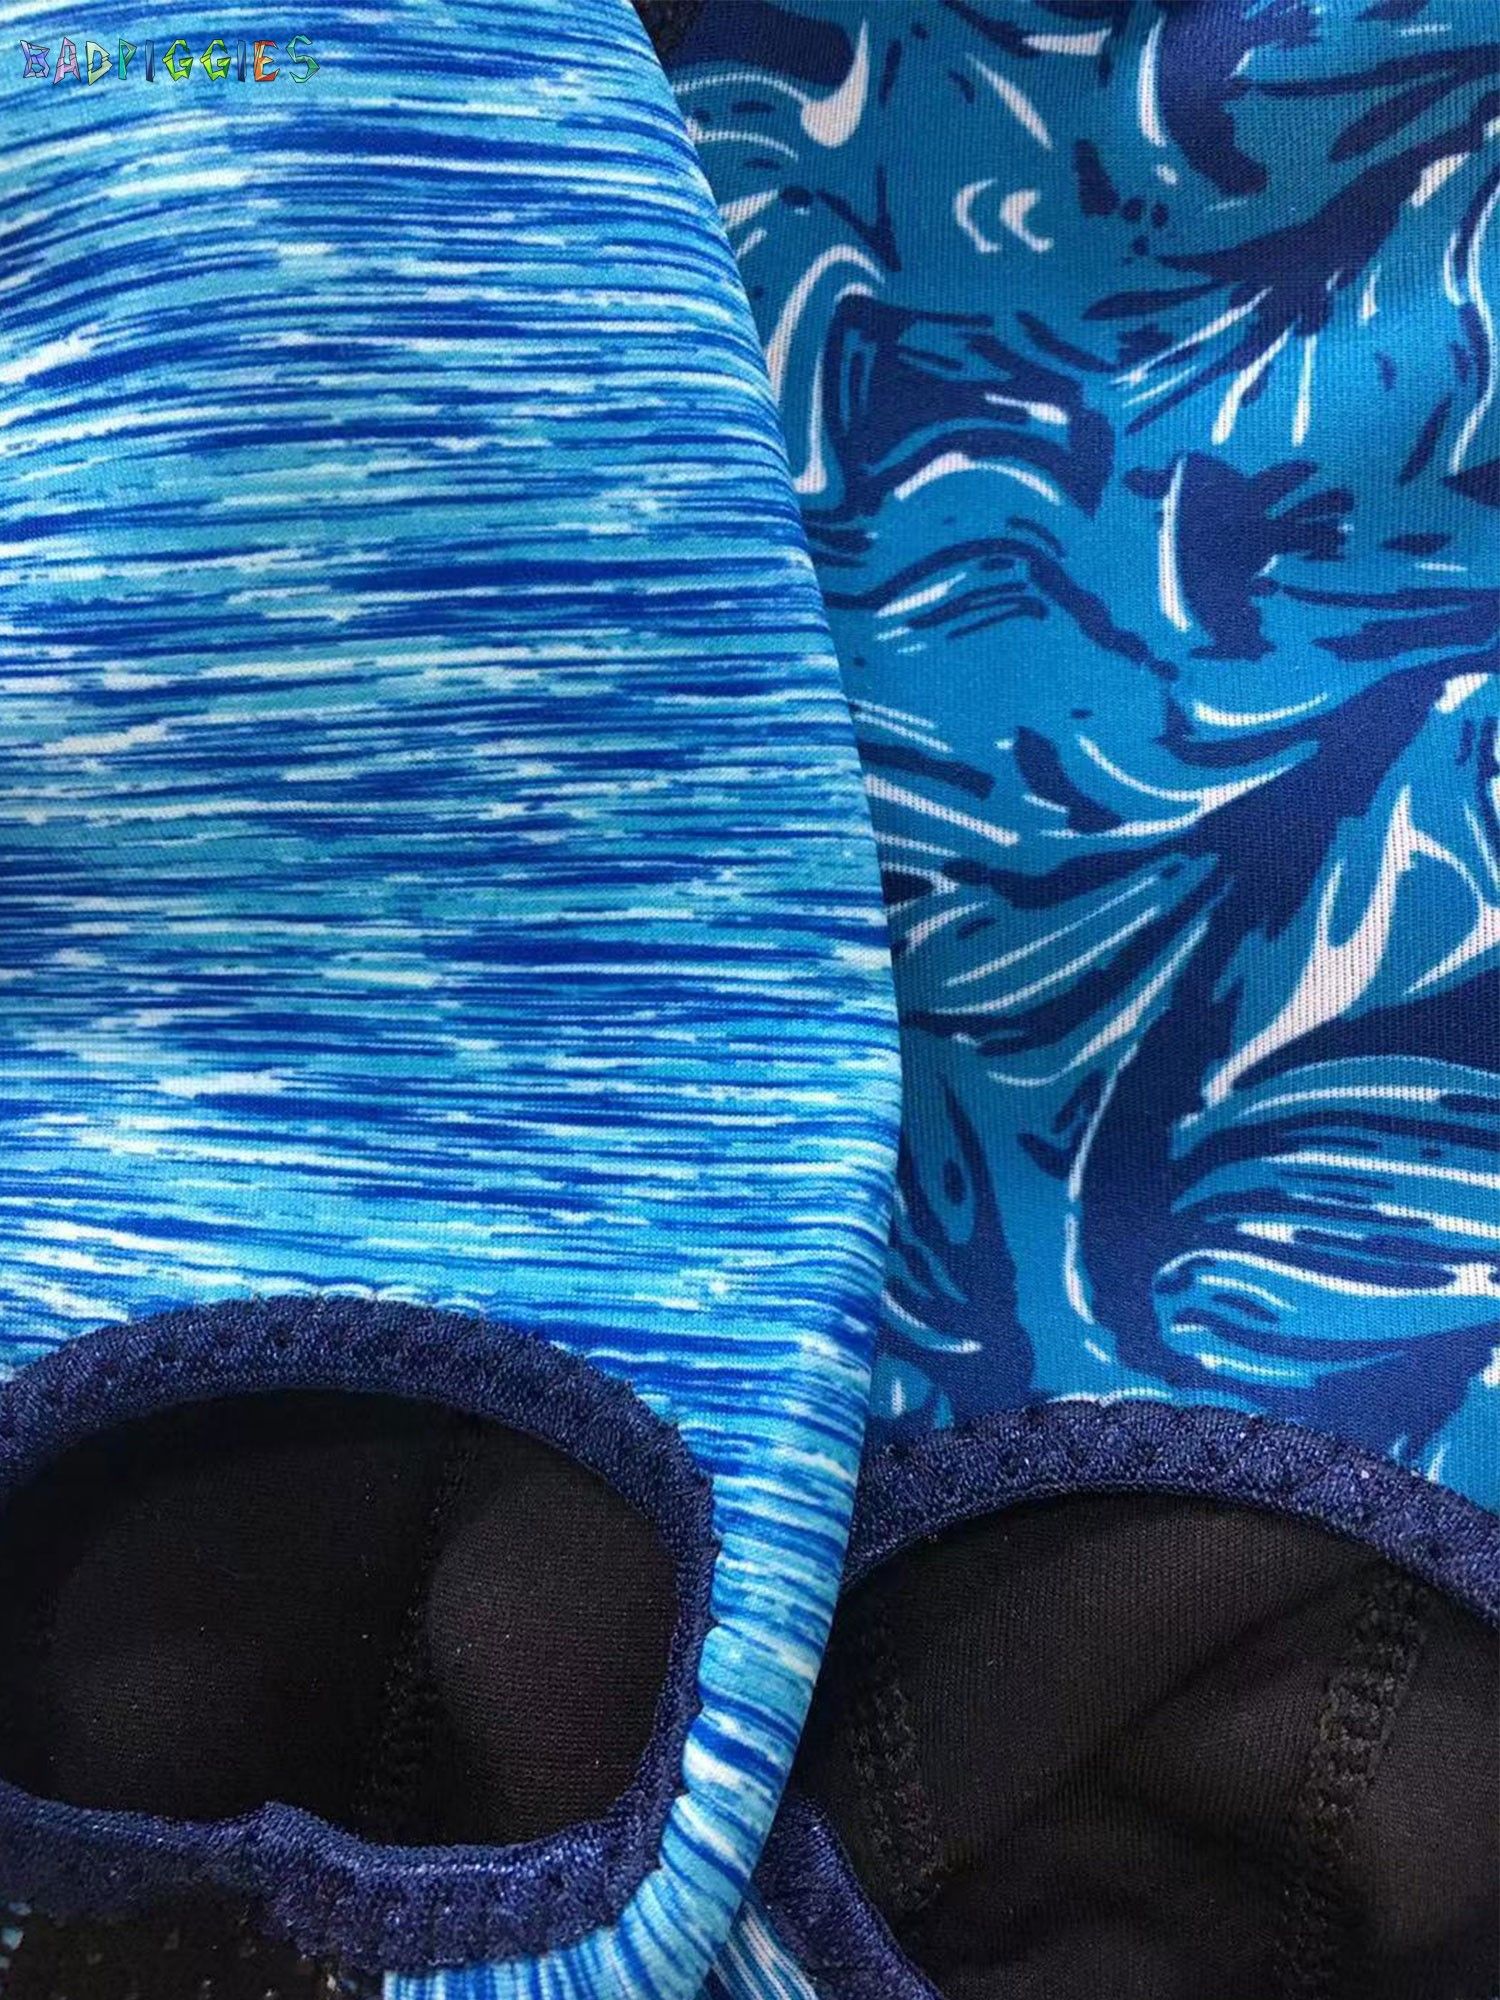 BadPiggies Water Socks Sports Beach Barefoot Quick-Dry Aqua Yoga Shoes Slip-on for Men Women Kids (S, Line Blue) - image 5 of 6